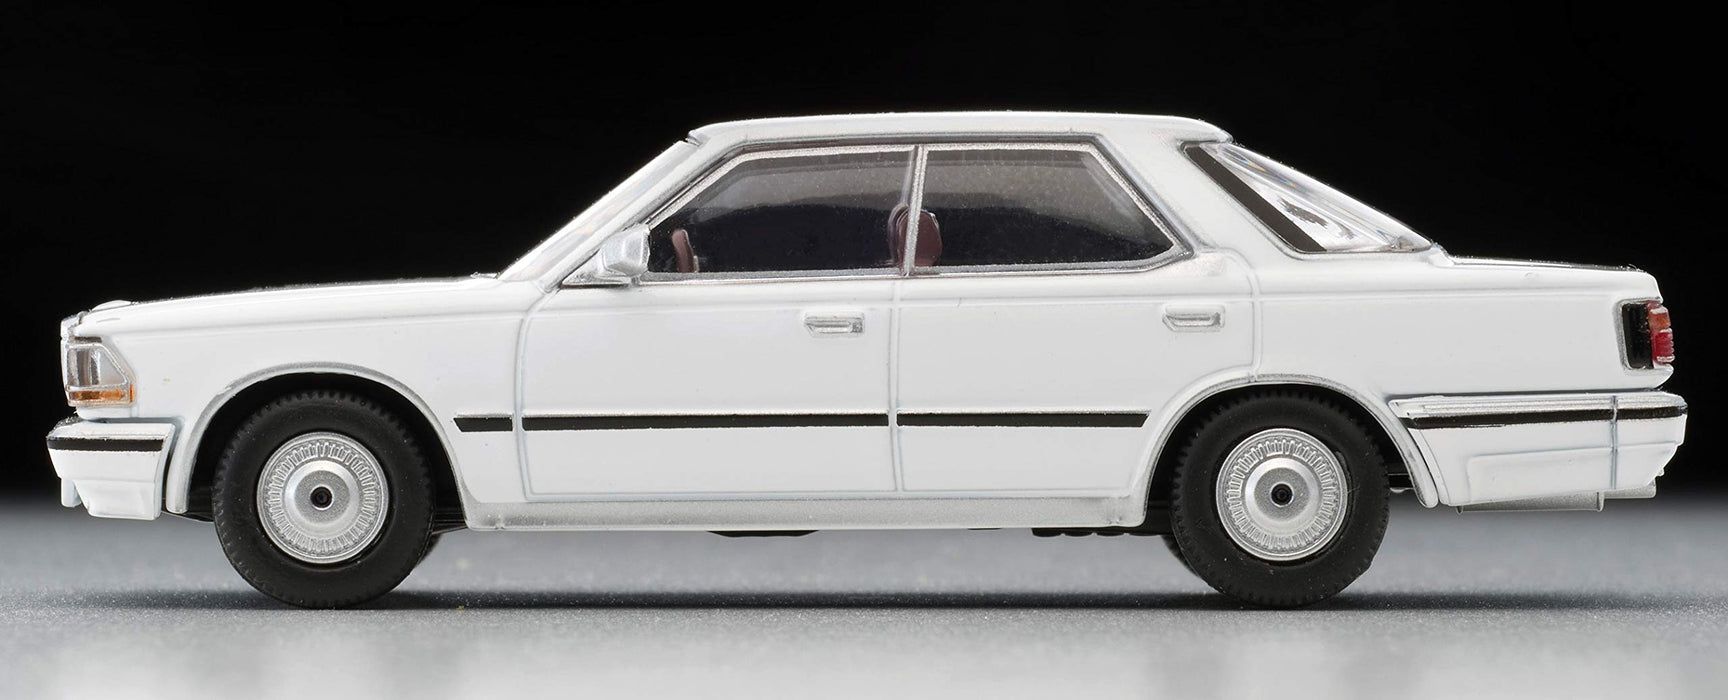 Tomytec Lv-N198a Tomica Limited Vintage Nissan Gloria Ht V20 86' White 1/64 Scale Car Toys